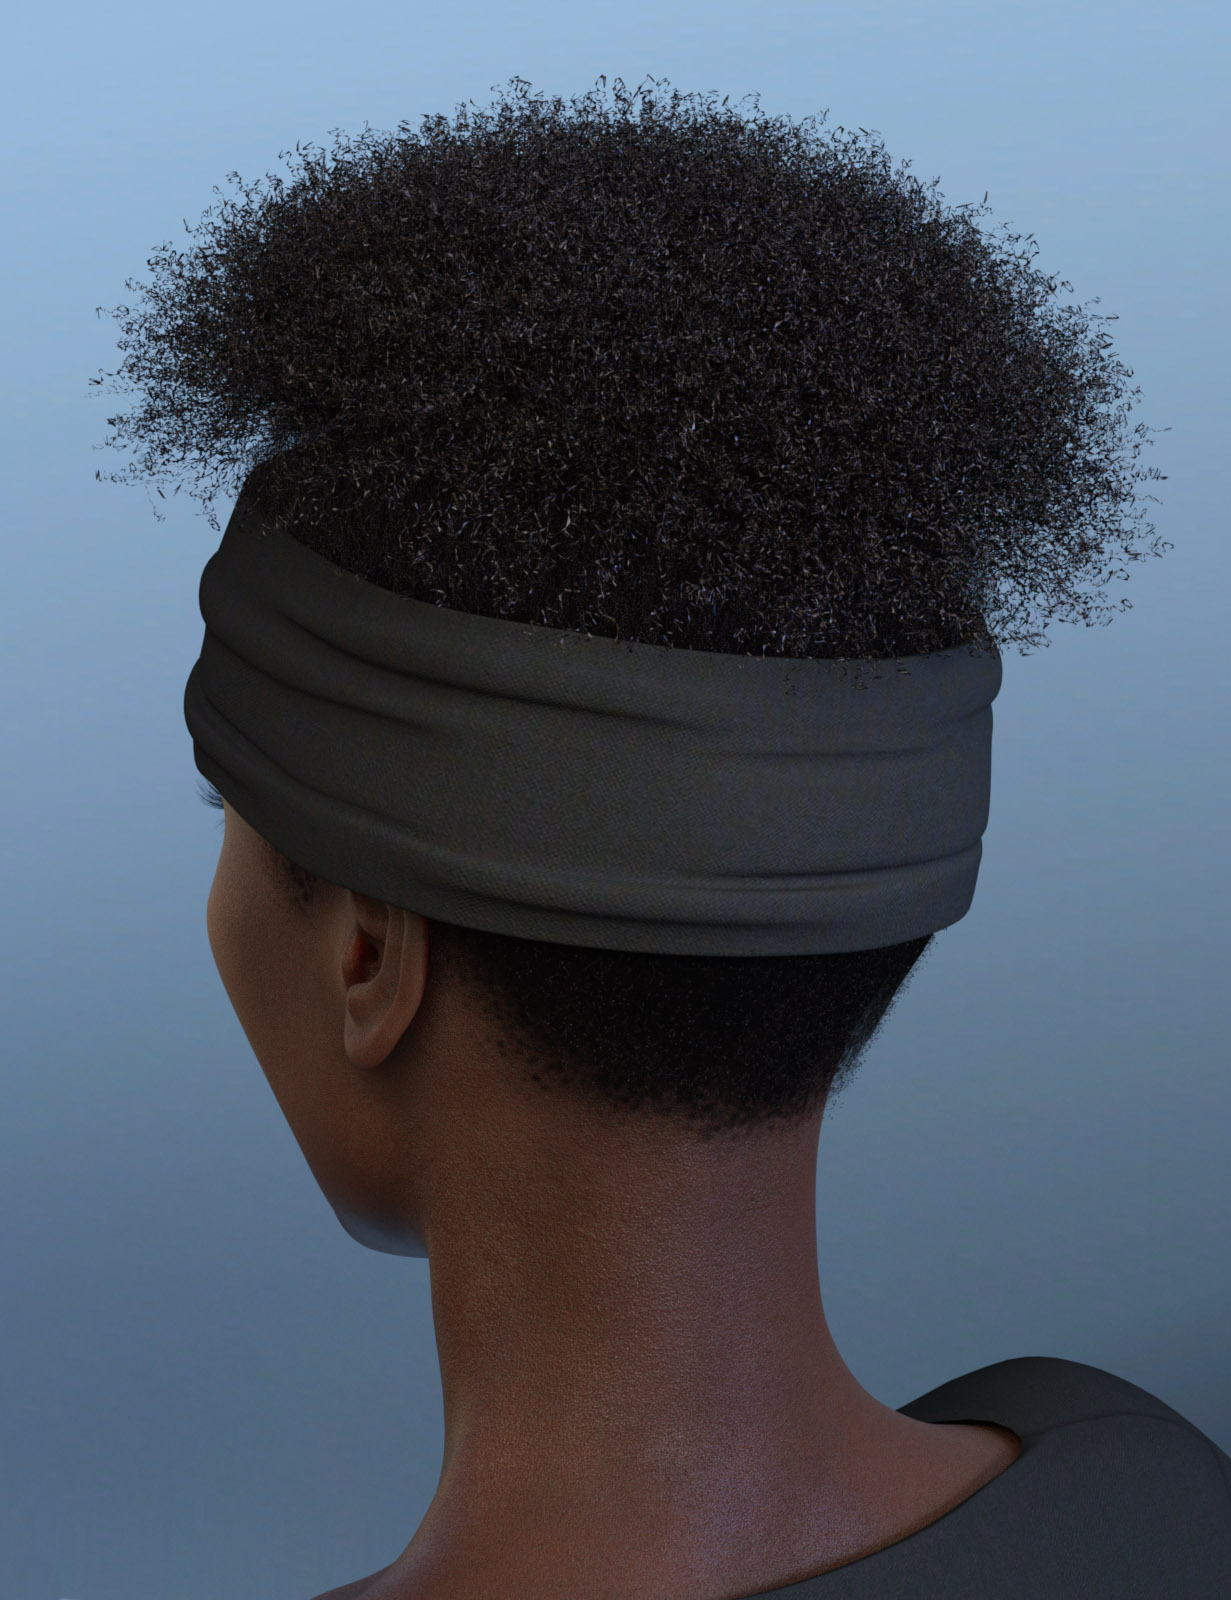 Artisan Hair for Genesis 8 Females by: Oskarsson, 3D Models by Daz 3D